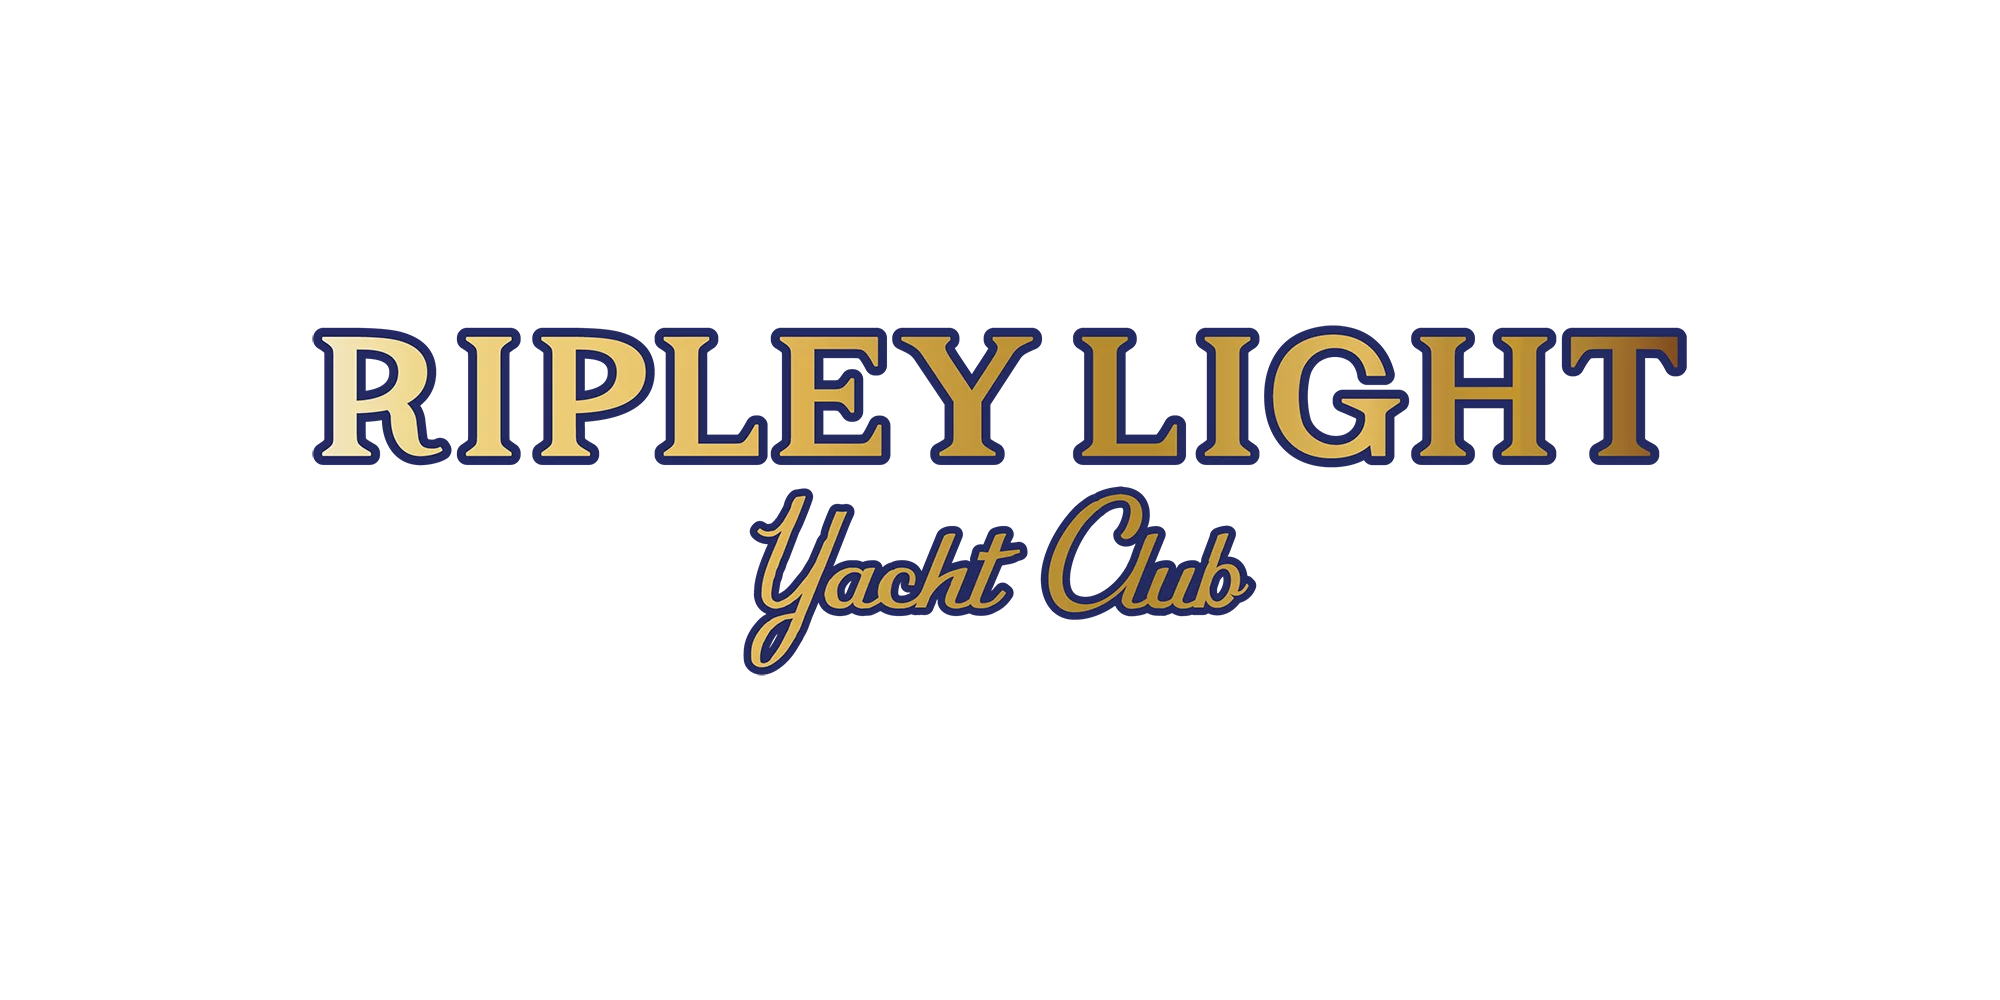 yacht clubs in charleston sc